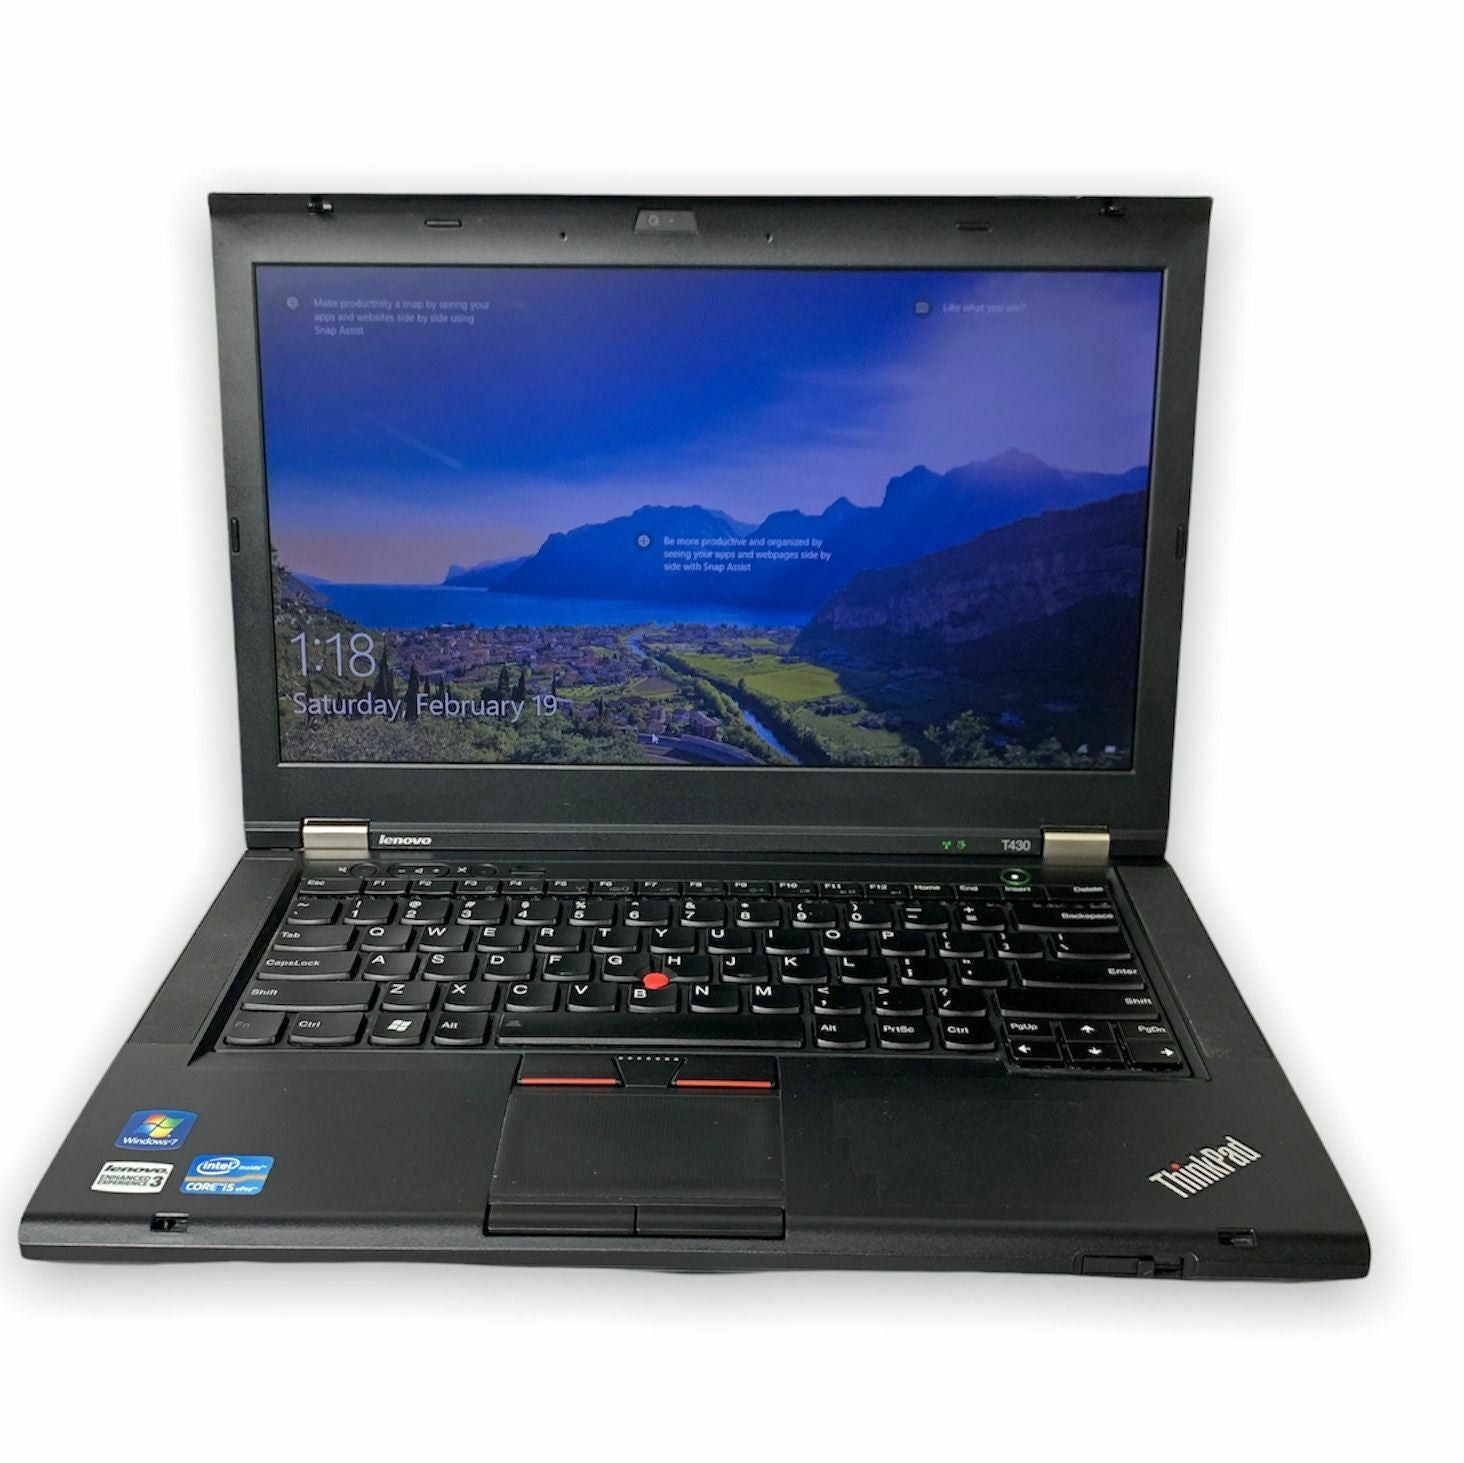 Lenovo ThinkPad T430 i5-3320M 2.60GHz 8GB RAM 500GB HDD Intel HD 4000 Win10 Pro